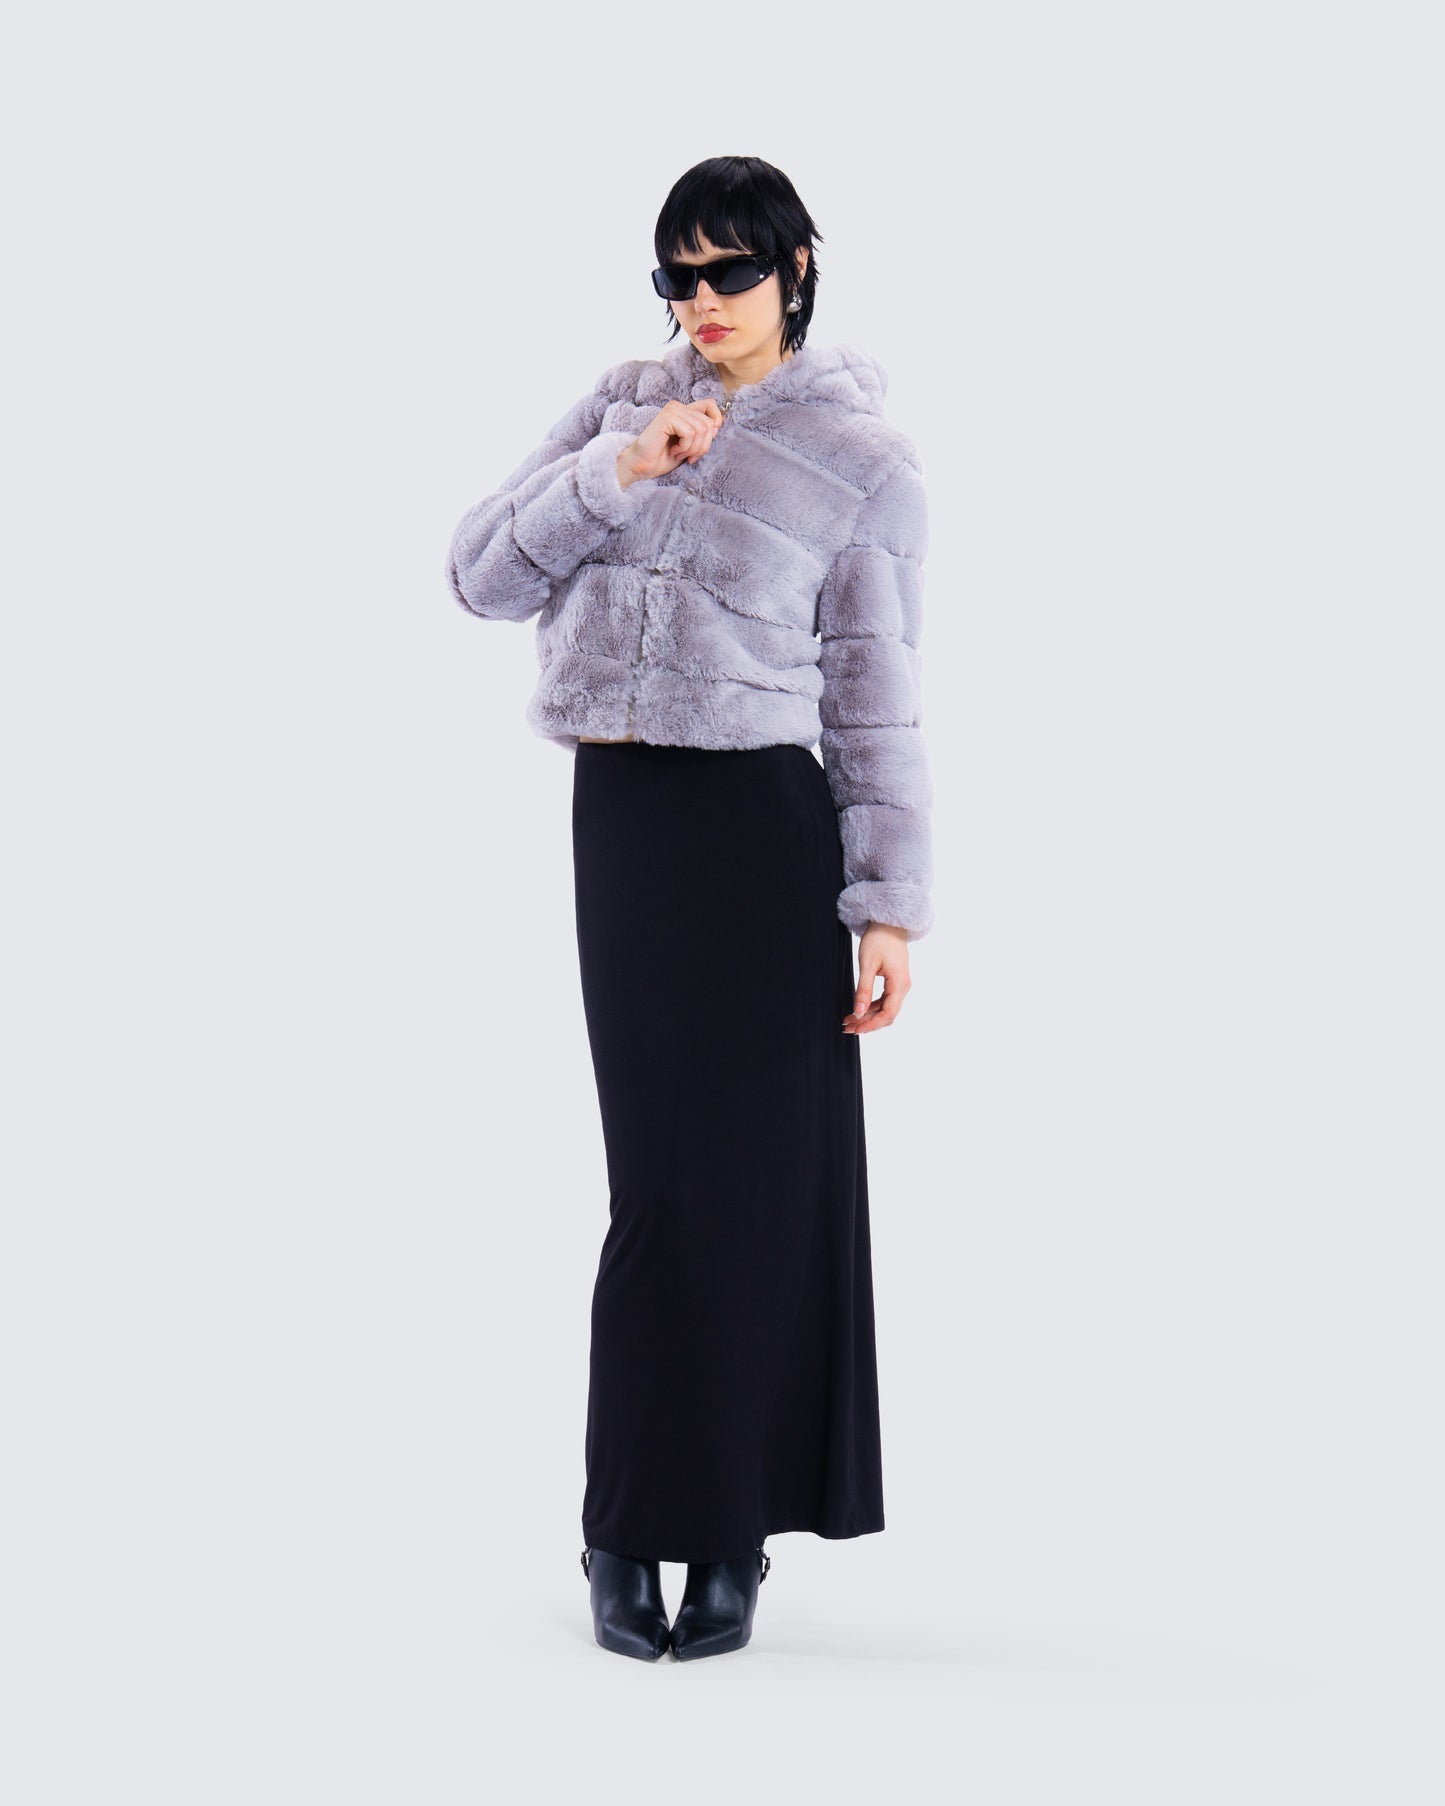 Angela Black Jersey Maxi Skirt